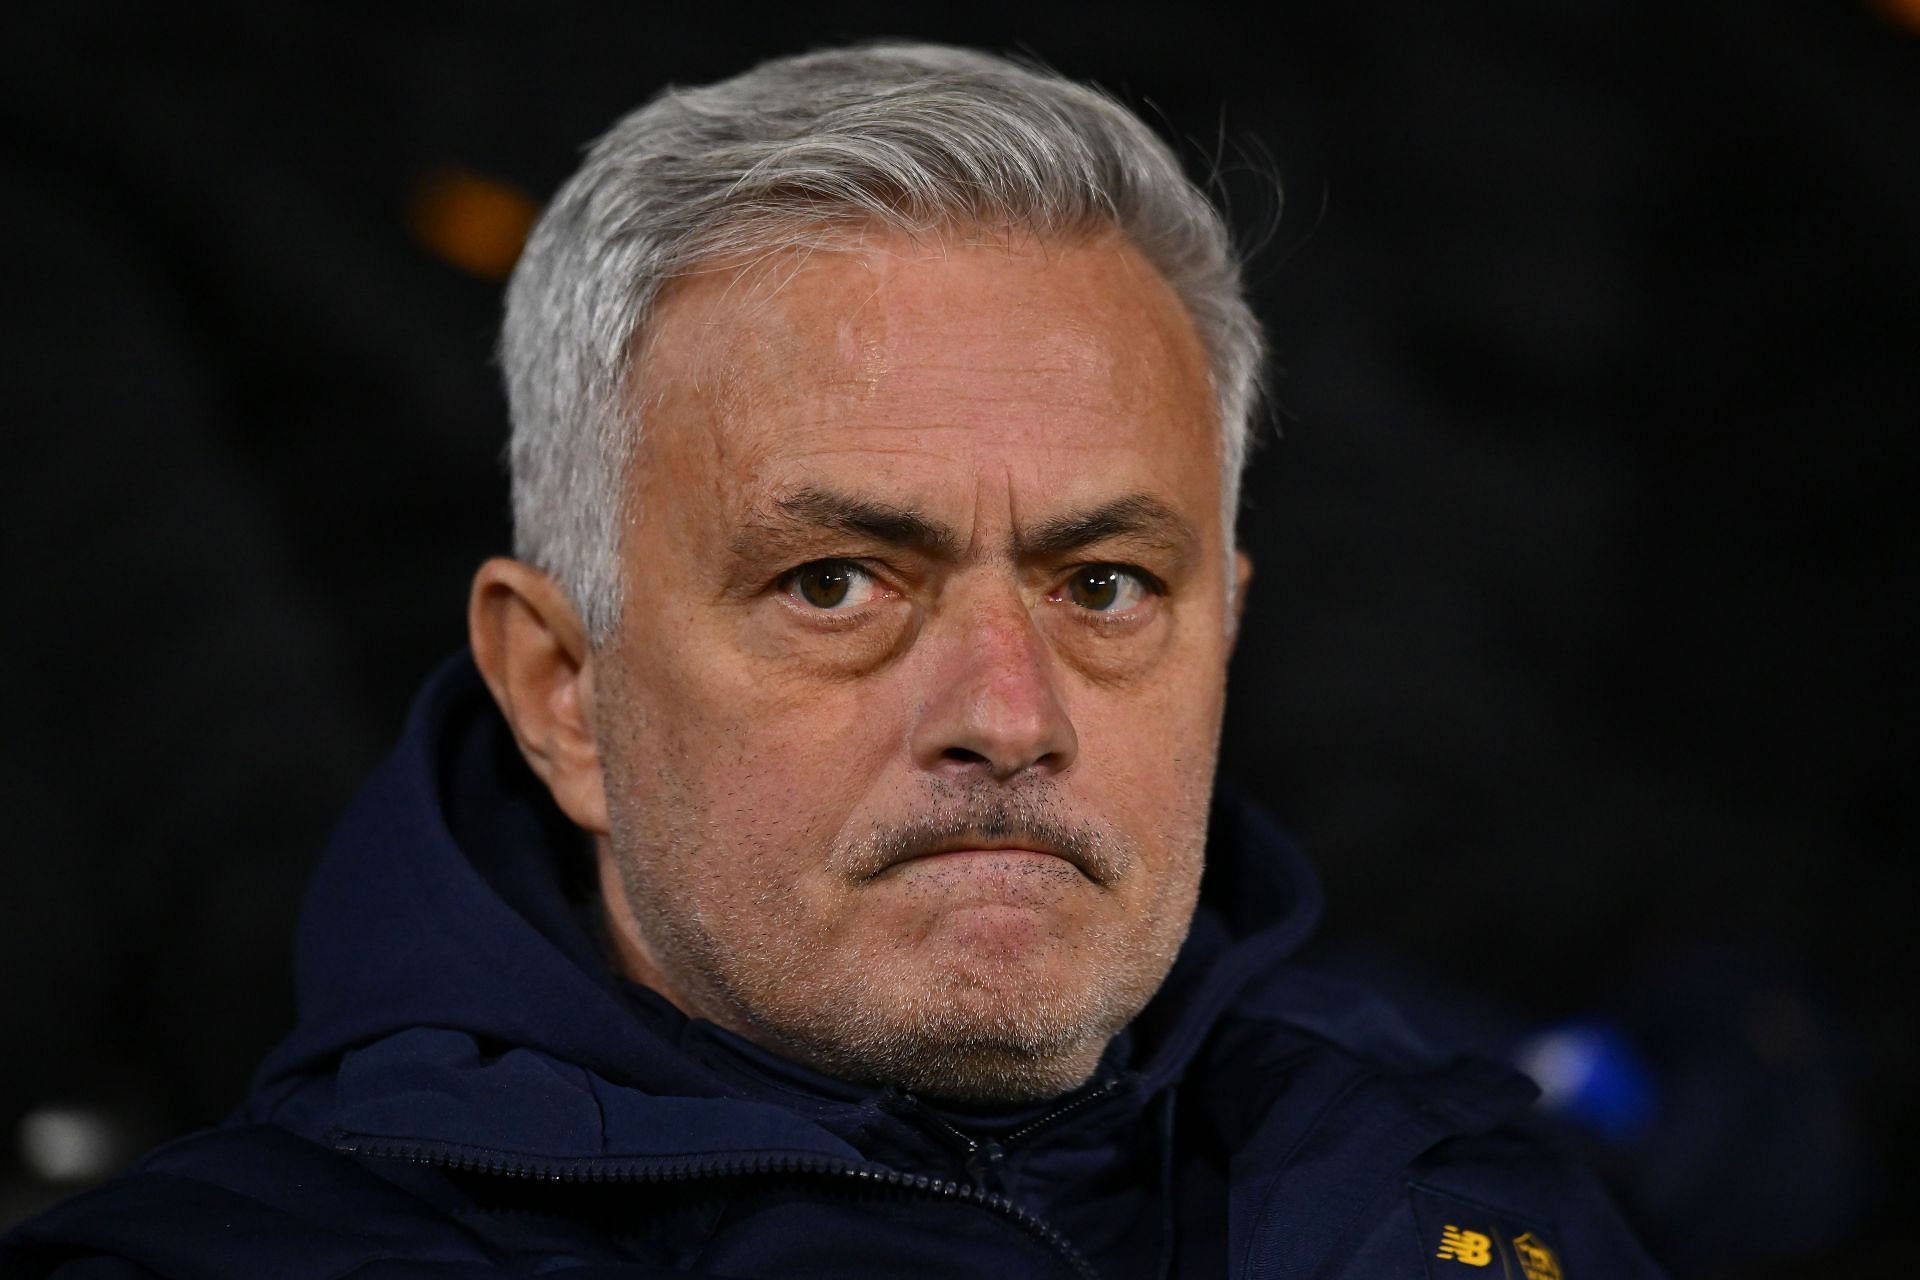 Jose Mourinho has taken AS Roma to the Europa League quarterfinals.